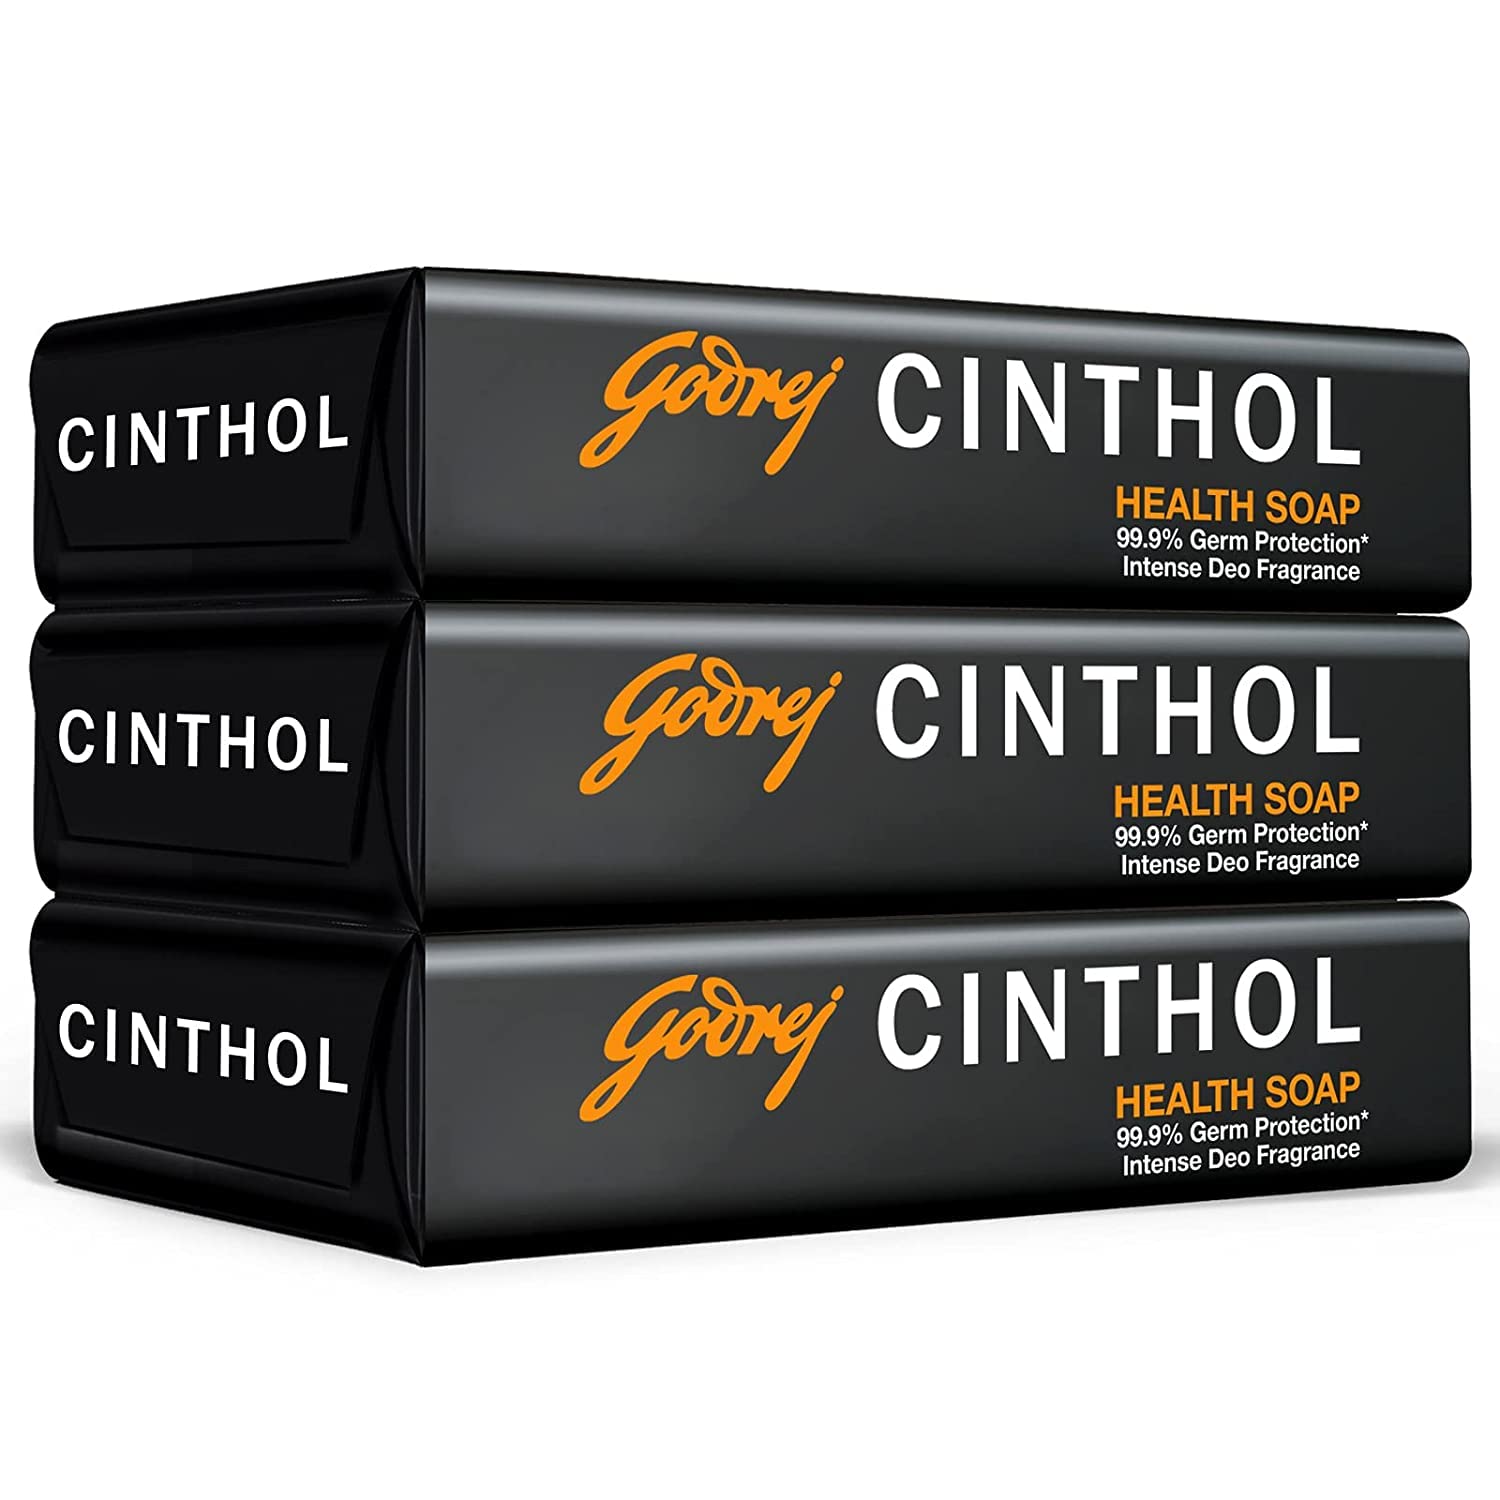 Cinthol health soap intense deo fragrance 3 x 100